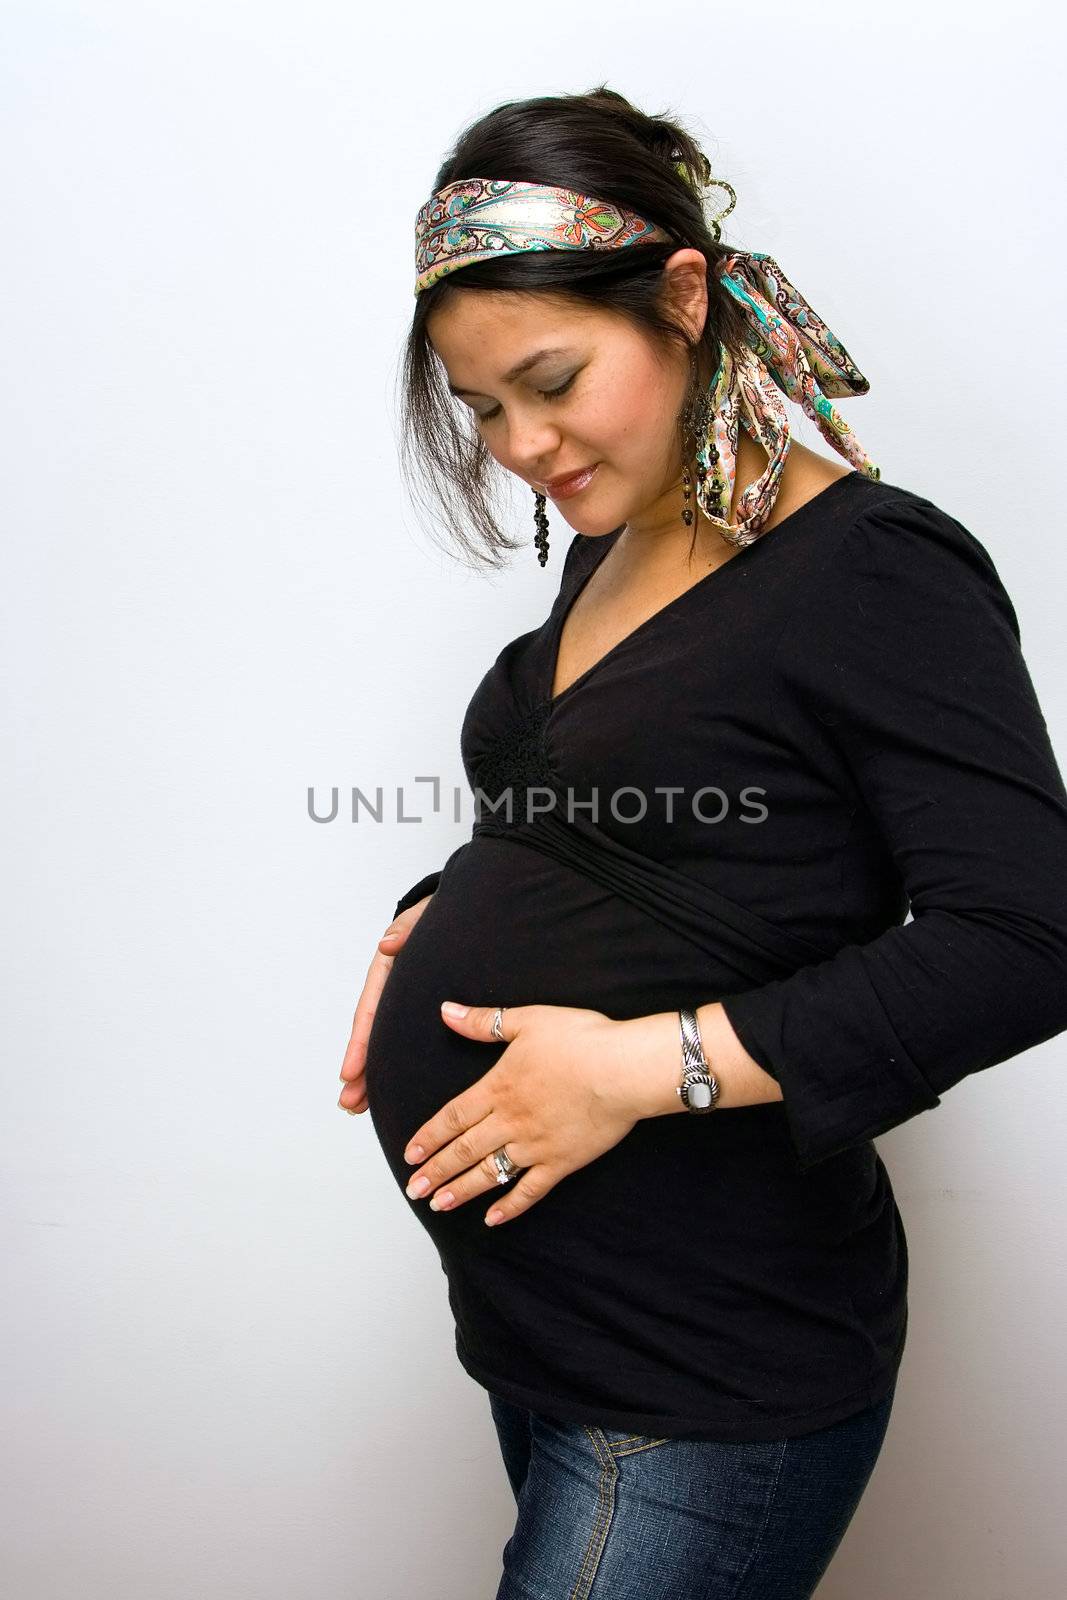 Pregnancy by phakimata